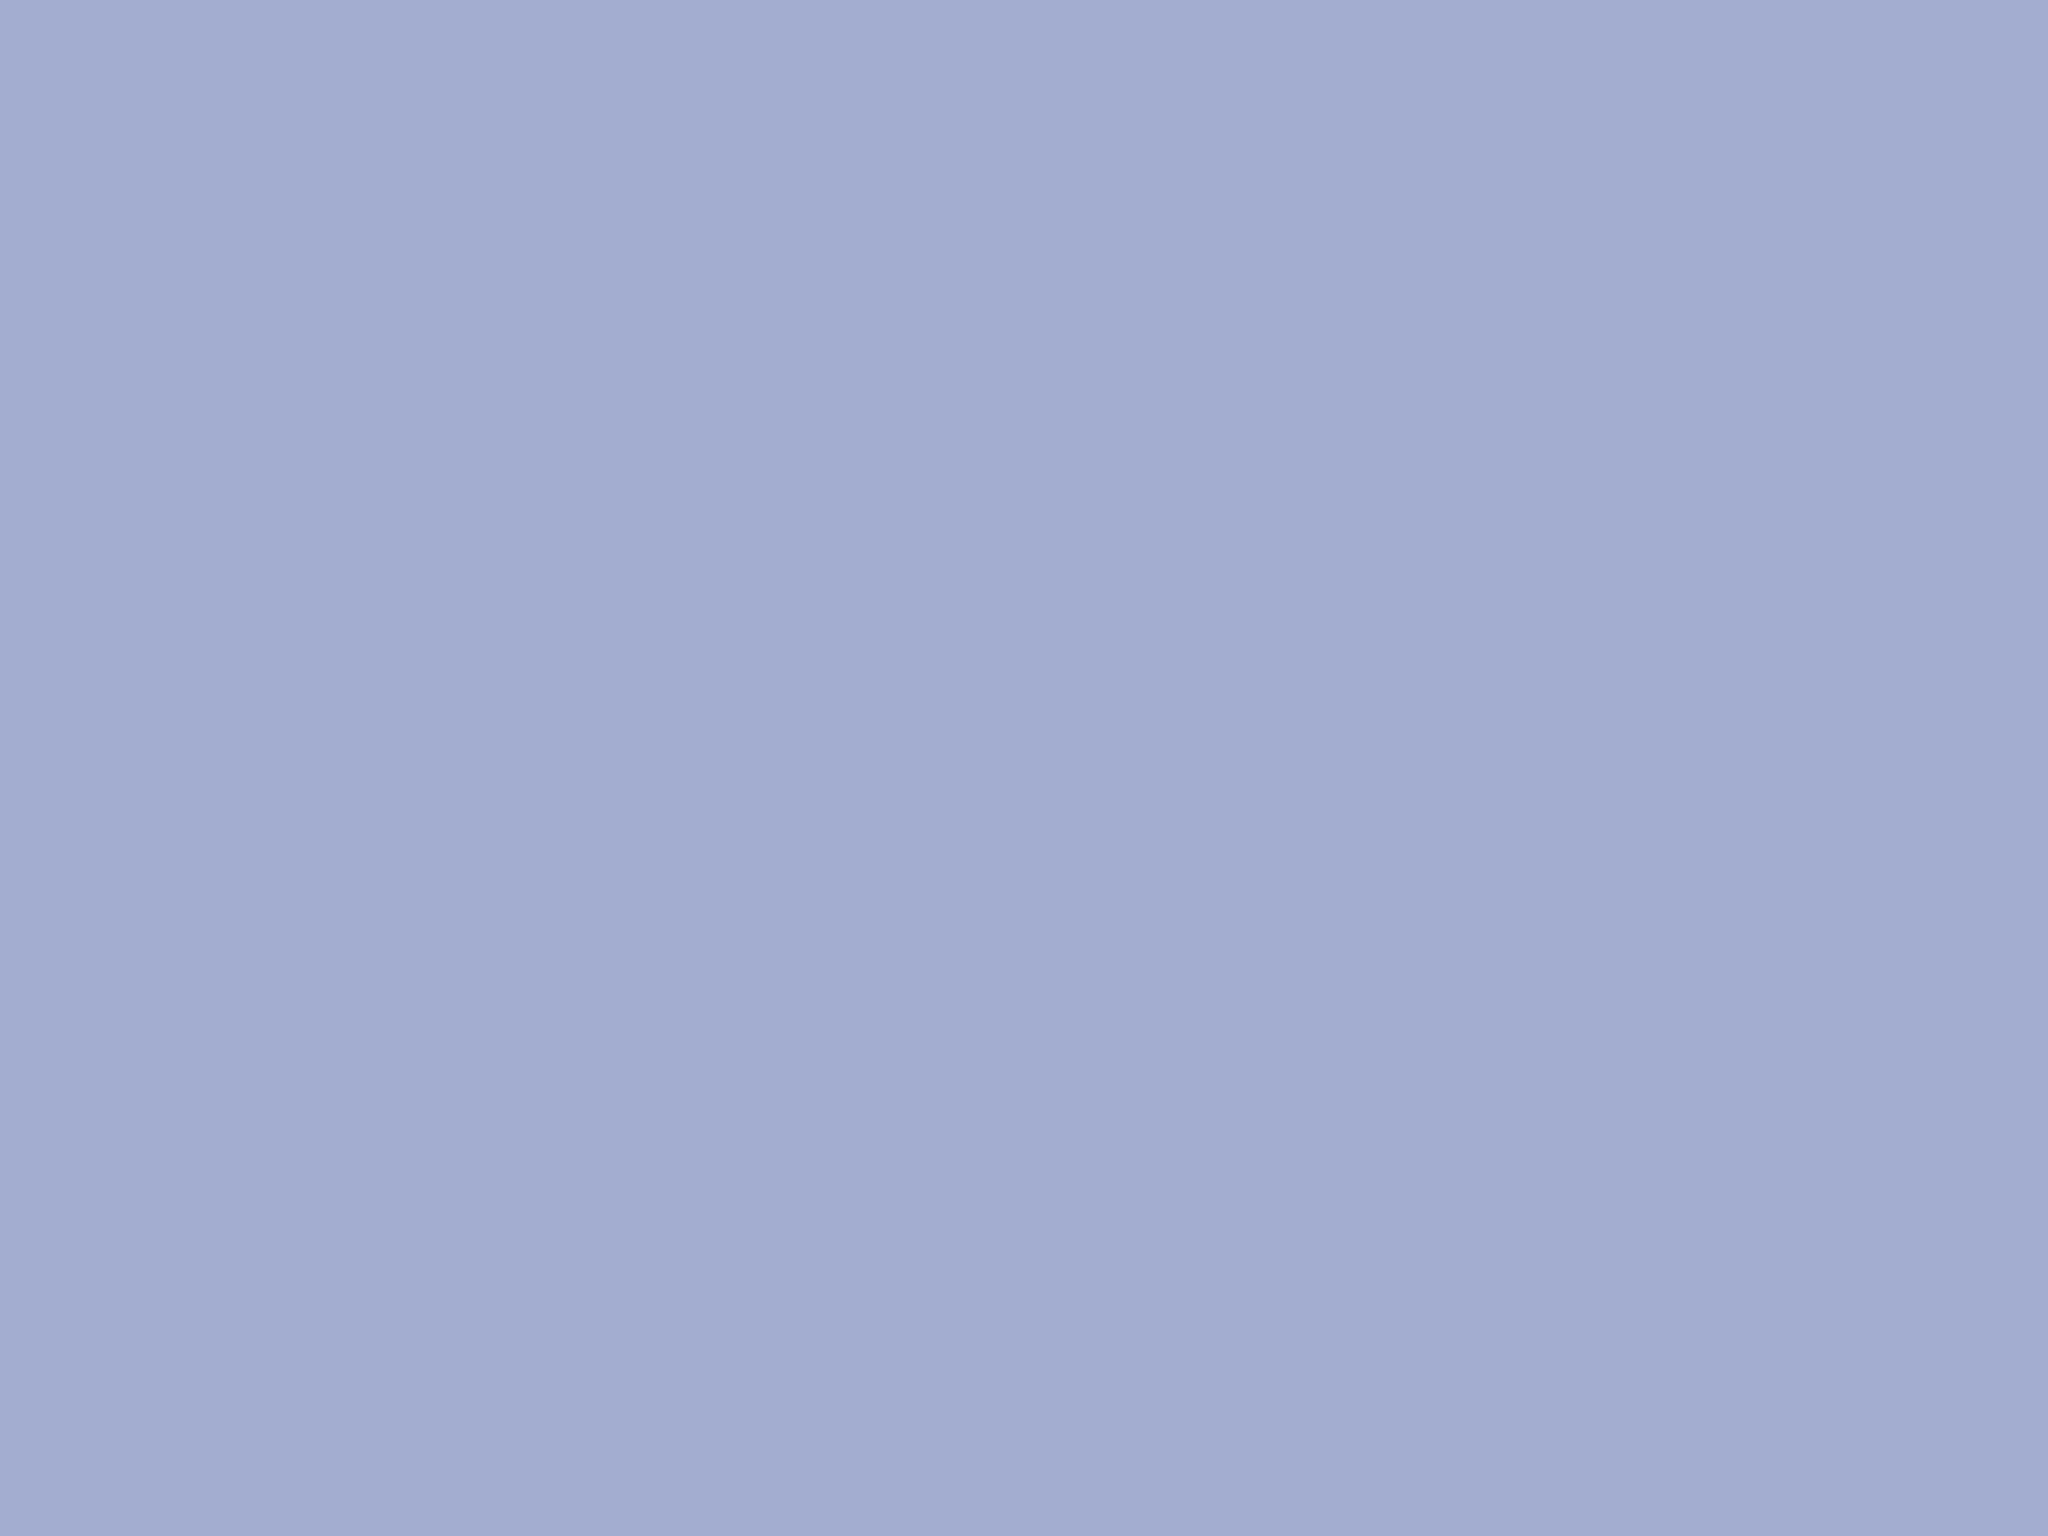 2048x1536 Wild Blue Yonder Solid Color Background